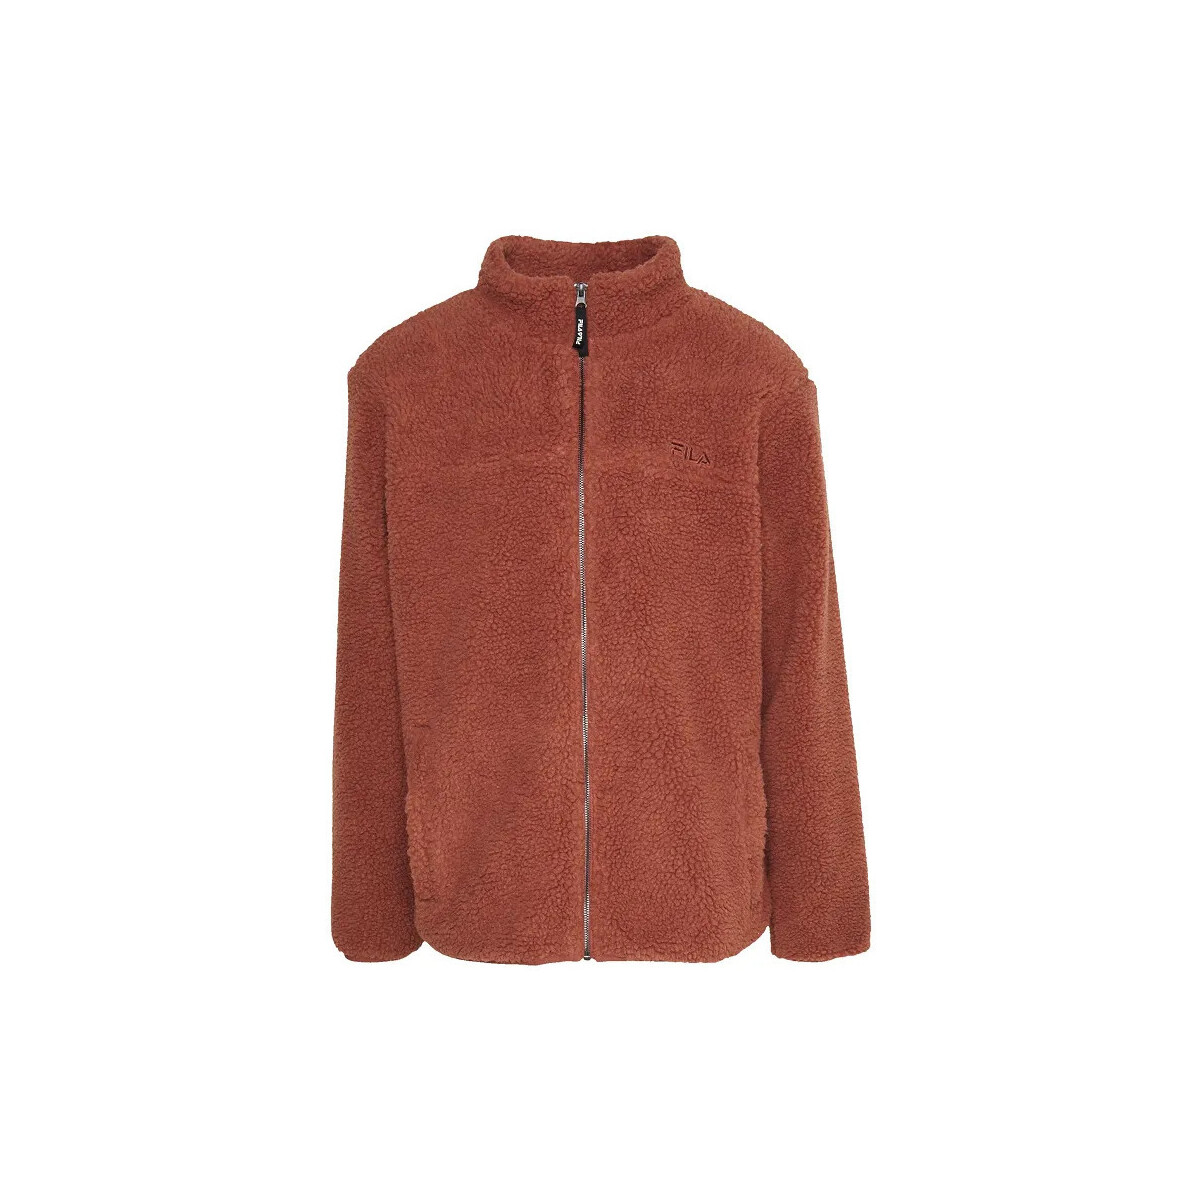 Vêtements Homme Sweats Fila Sweat-shirt Polaire Sherpa orsetto  BRAUNLAGE Mars Rouge